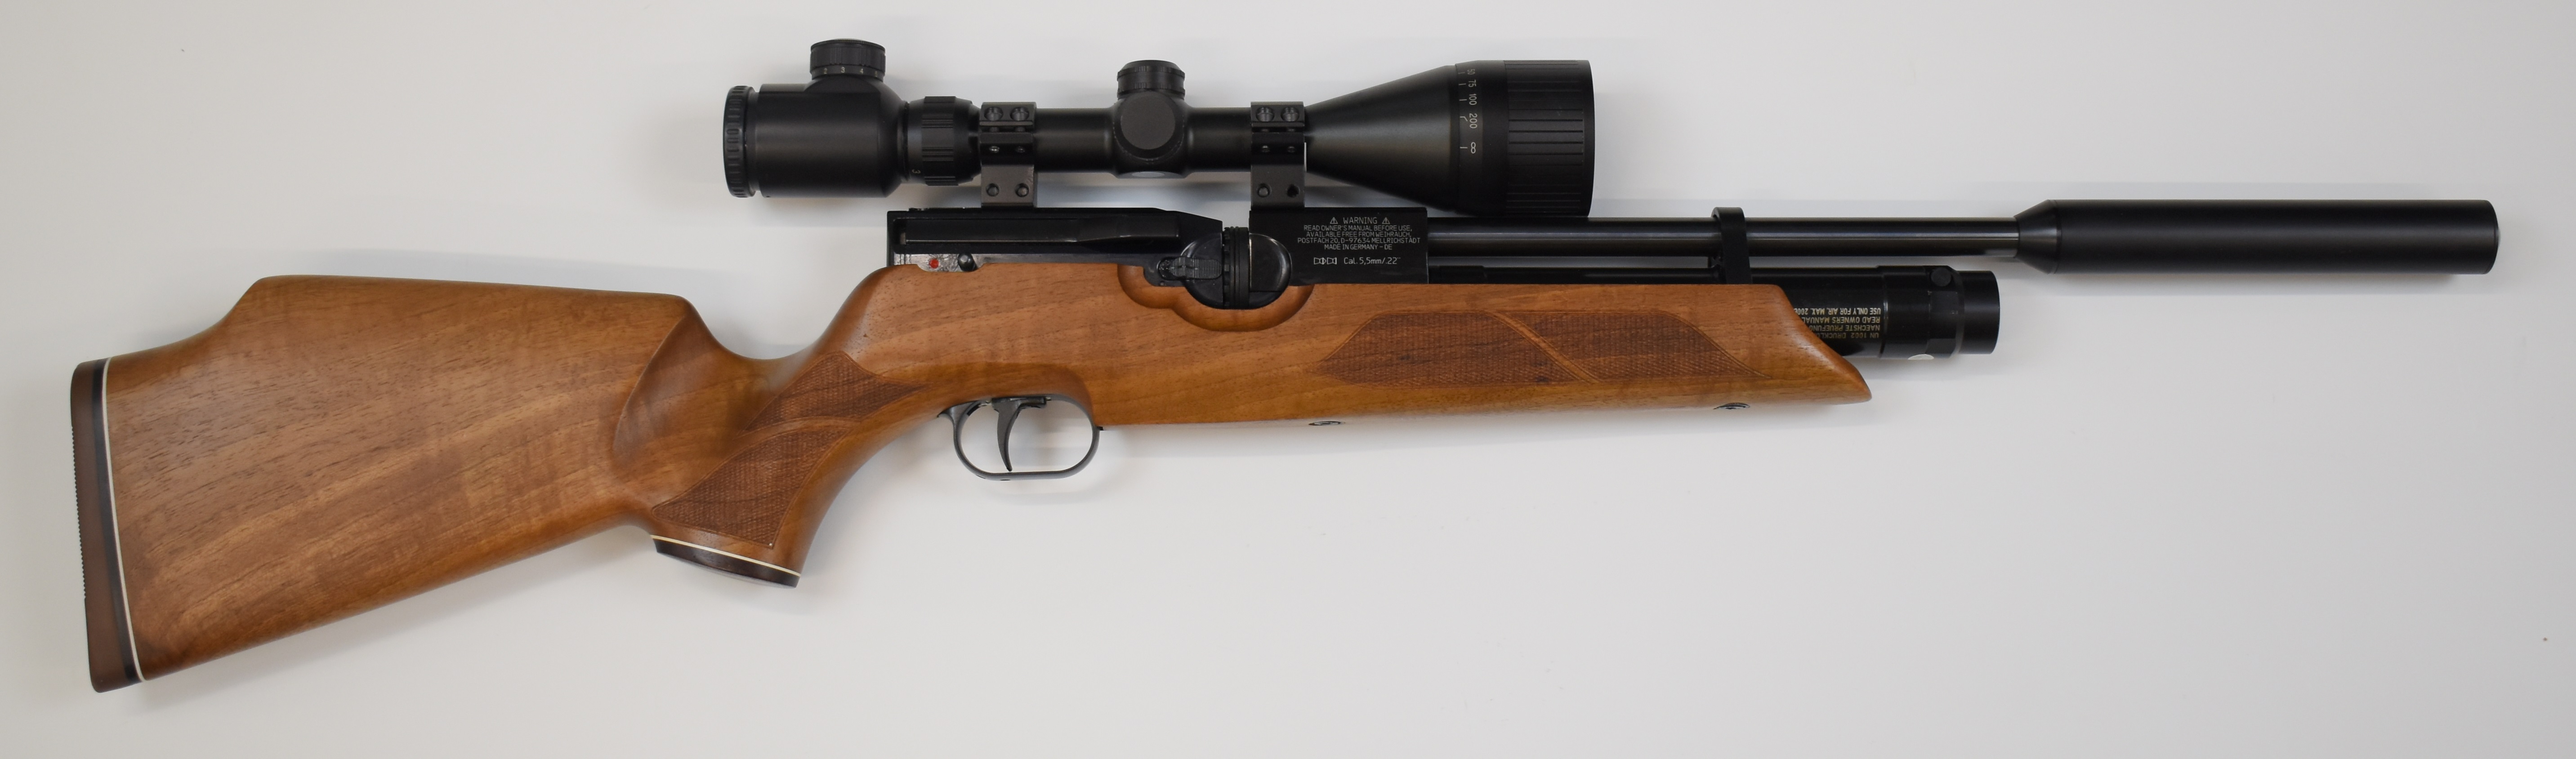 Weihrauch HW100 K S .22 PCP air rifle with chequered semi-pistol grip, raised cheek piece, - Image 2 of 11